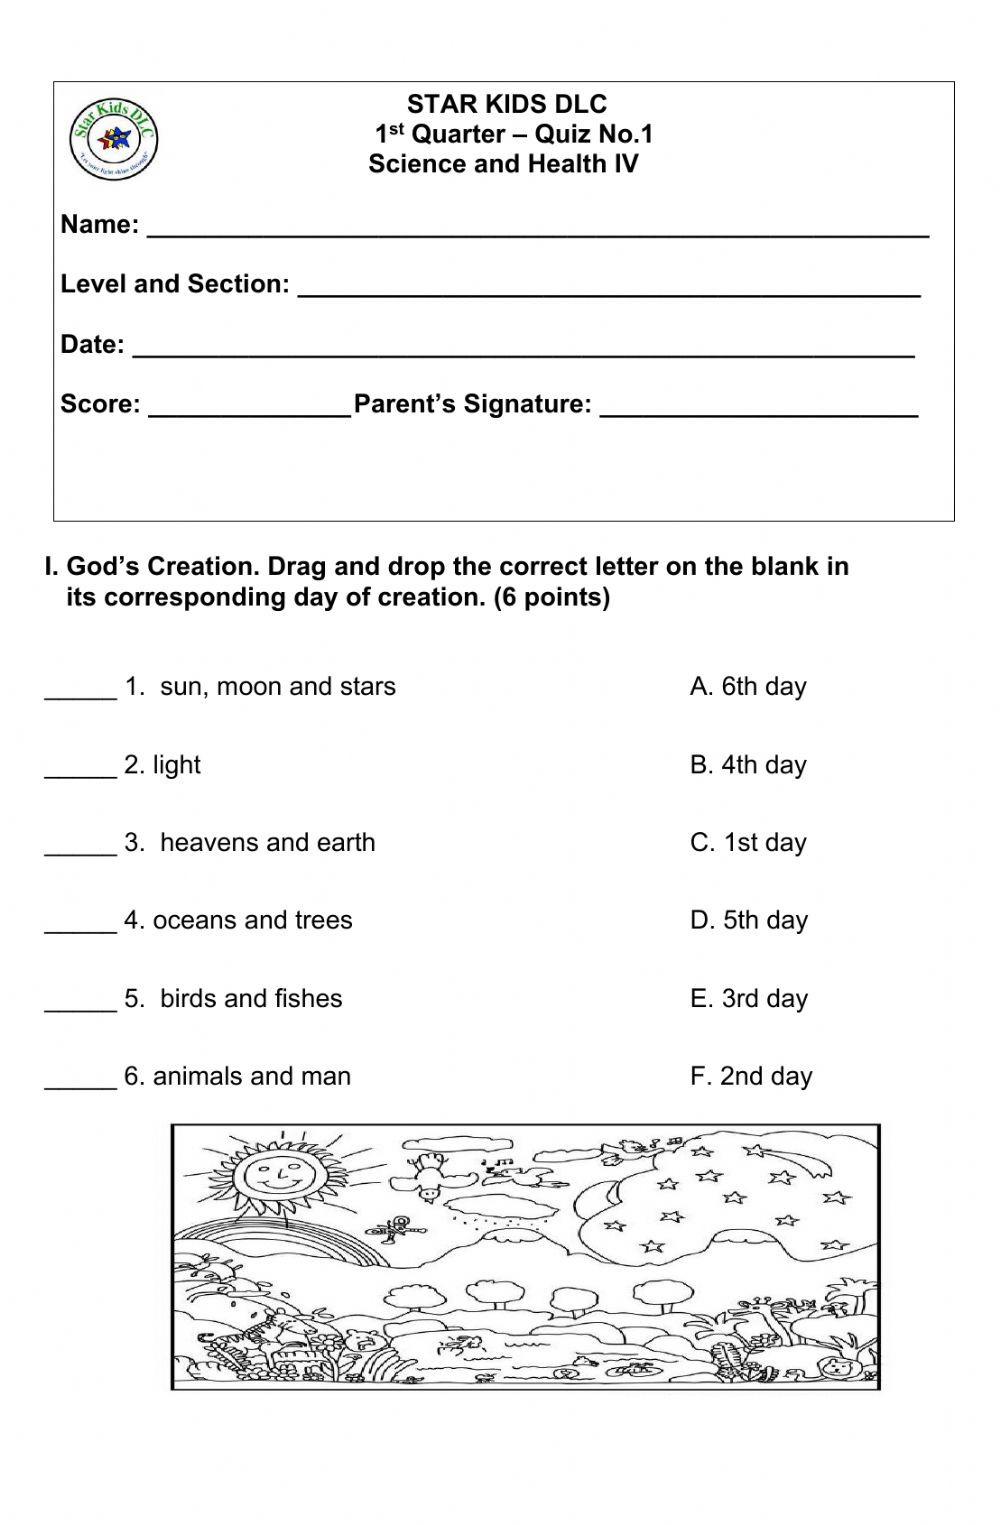 Scientific Method Worksheet 4th Grade 1st Qtr Quiz No 1 Science Grade 4 Interactive Worksheet